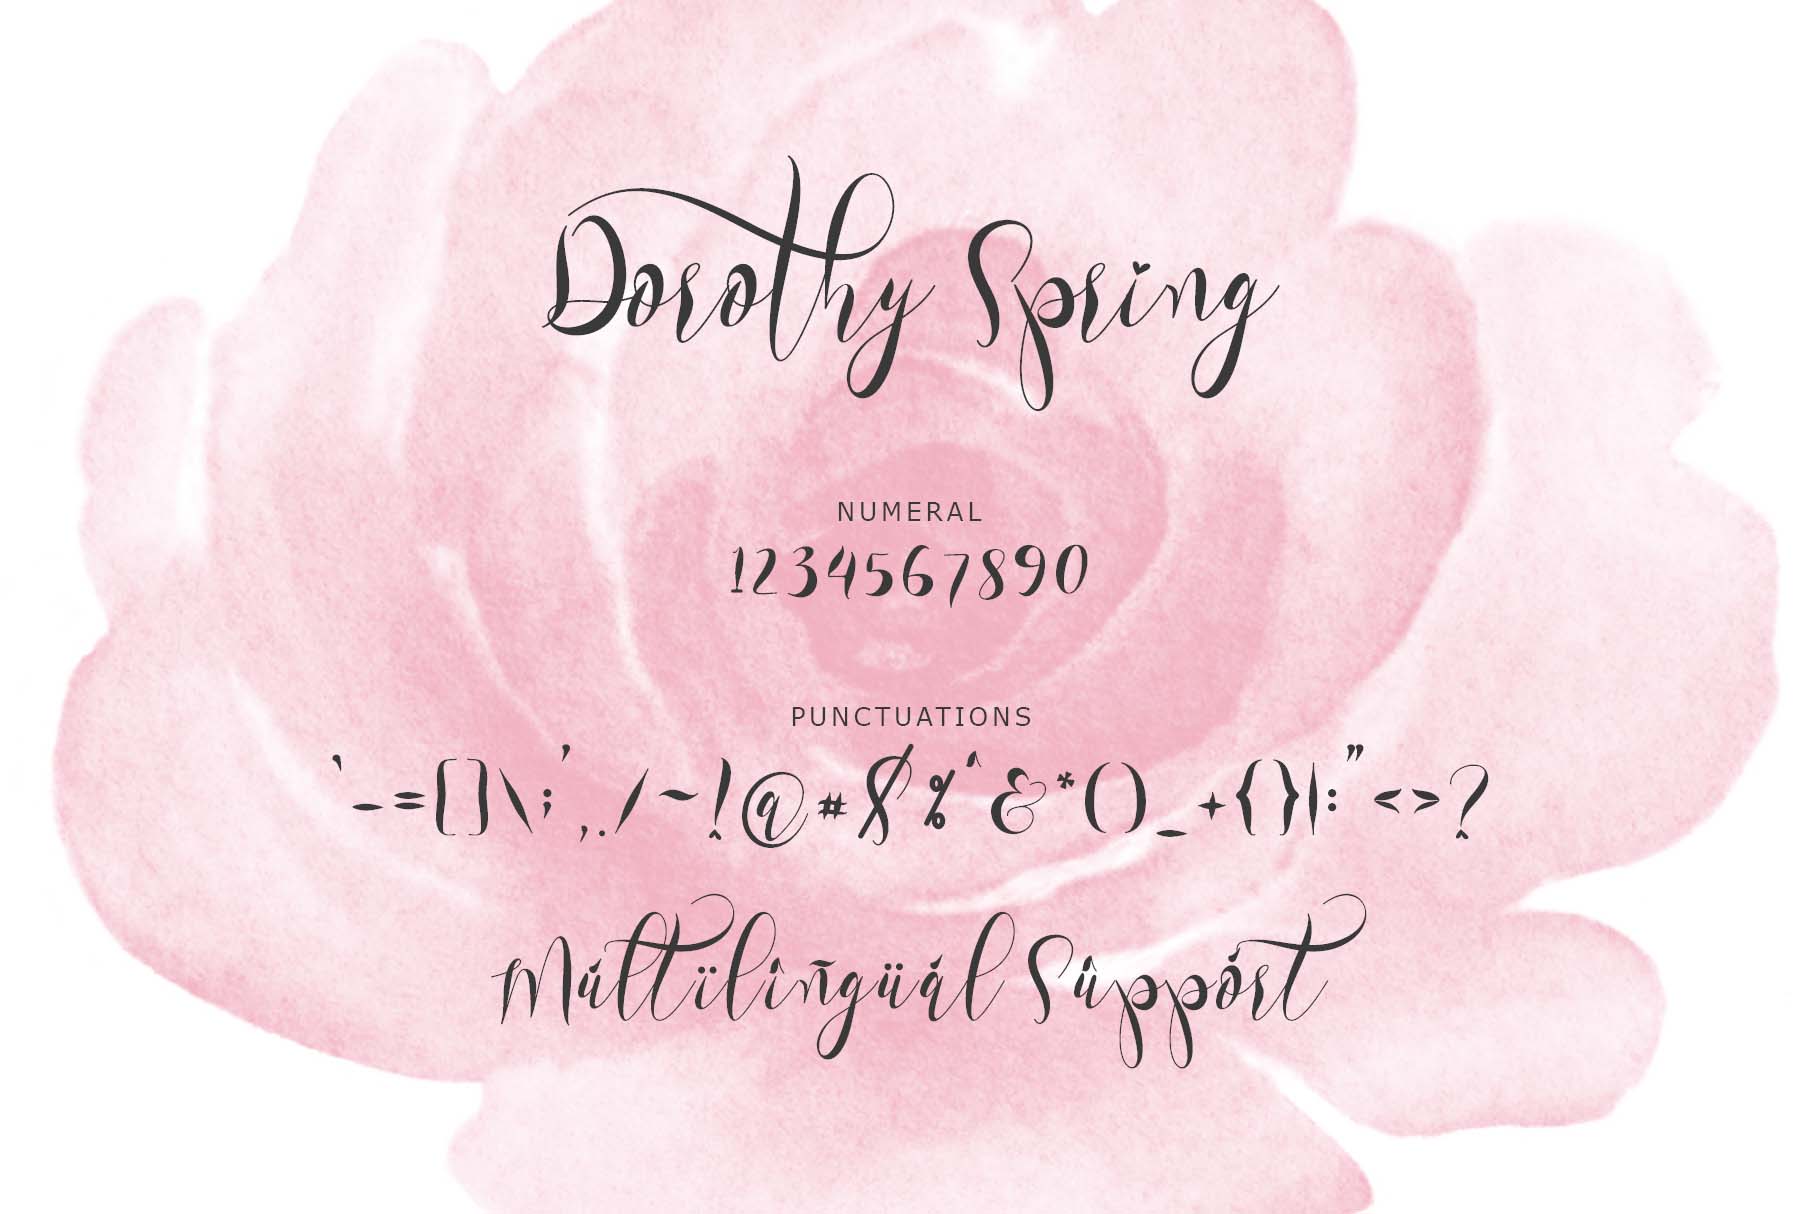 Dorothy Spring